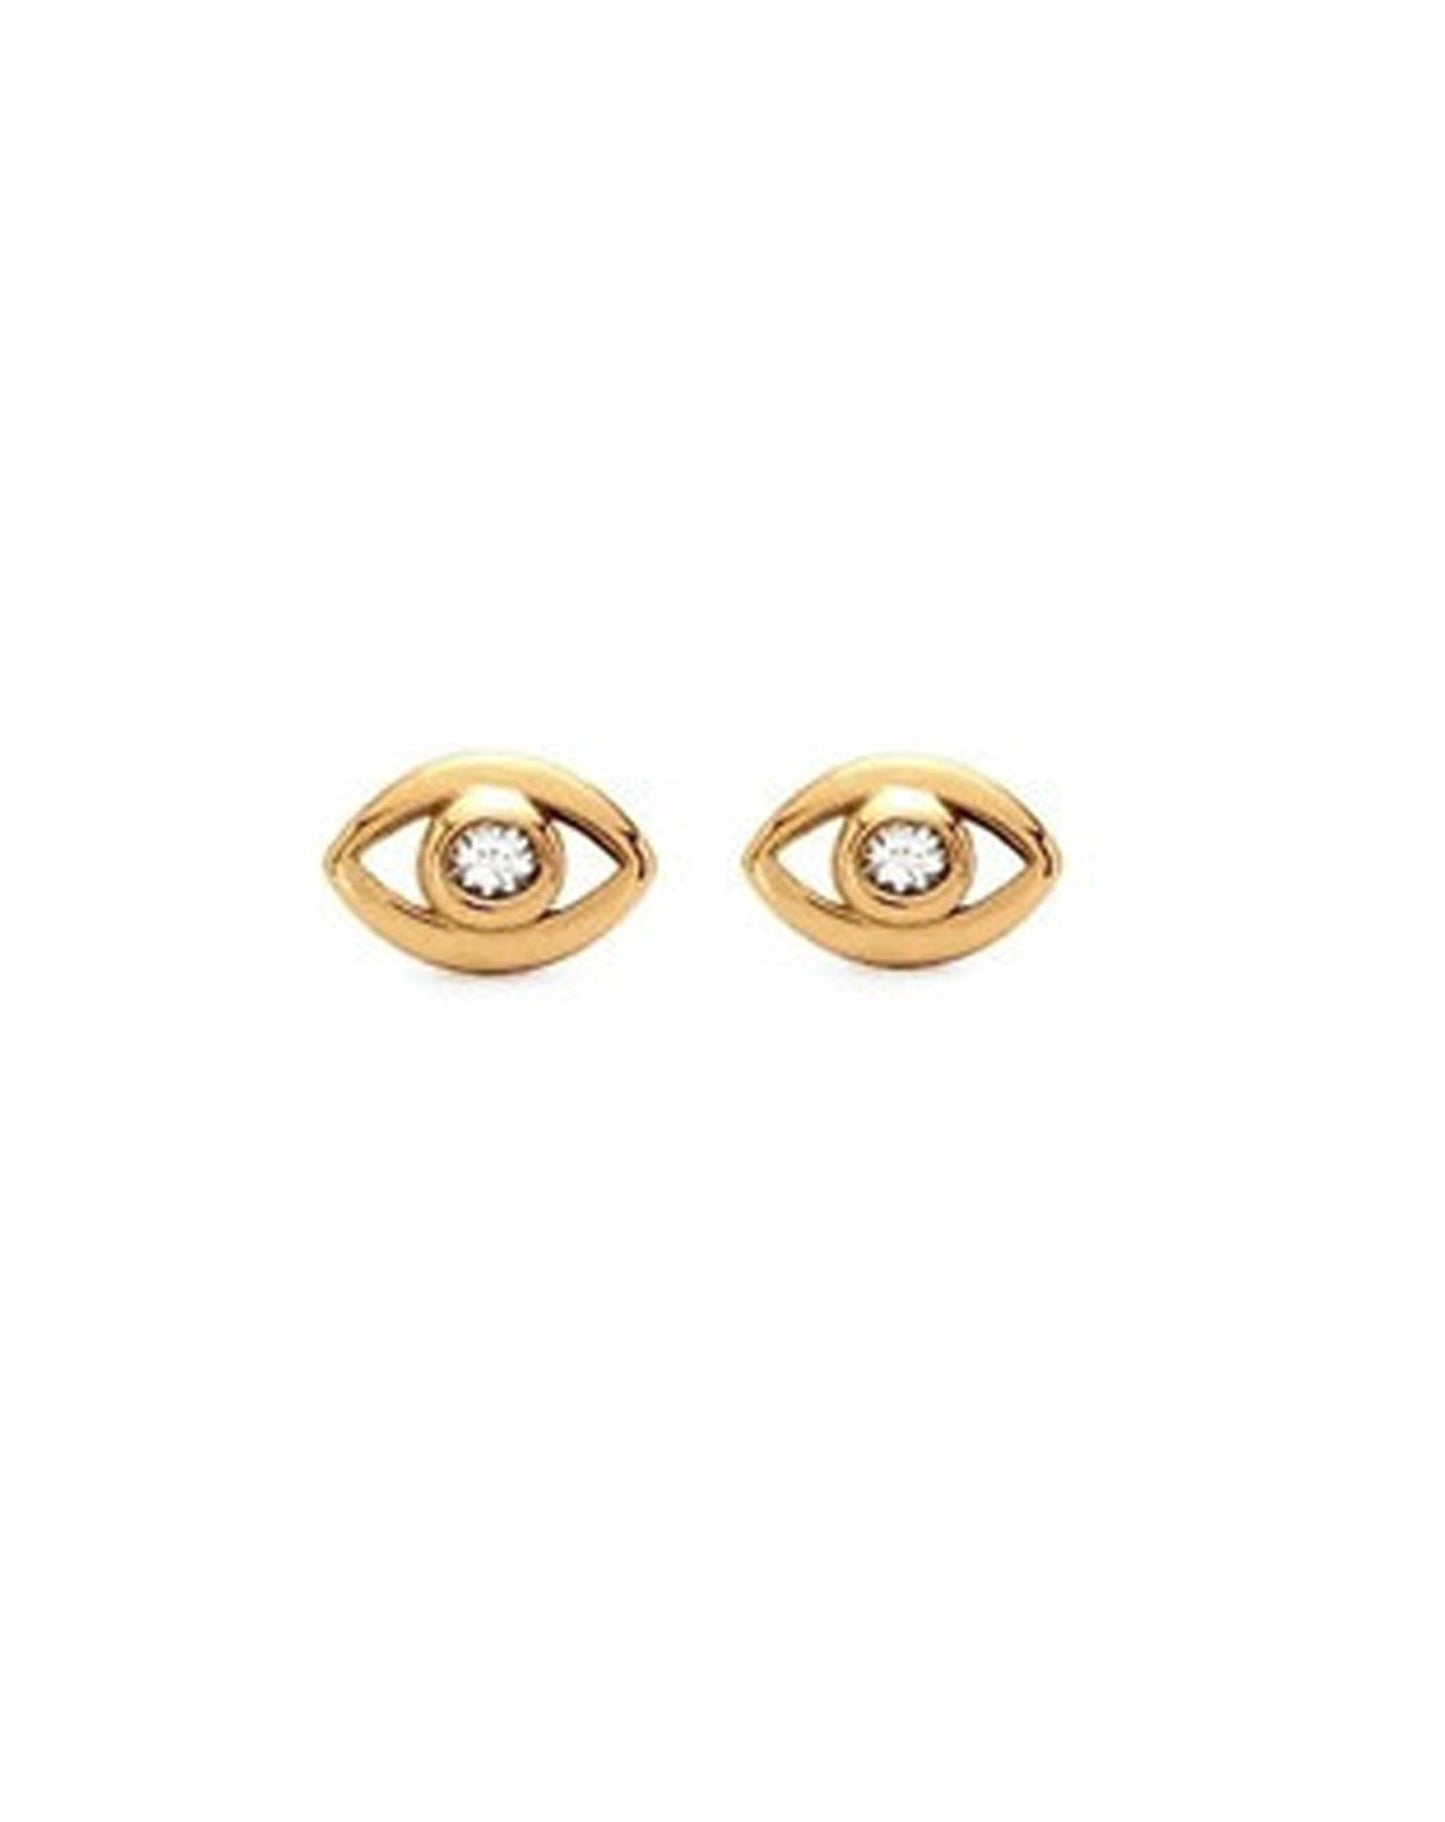 Cubic Zirconia Evil Eye Studs,  Gold Evil Eye CZ Earrings, Tiny Studs, Small Hamsa Stud Earrings, Evil Eye Jewelry, Eye-shaped stud gift - Anya Collection